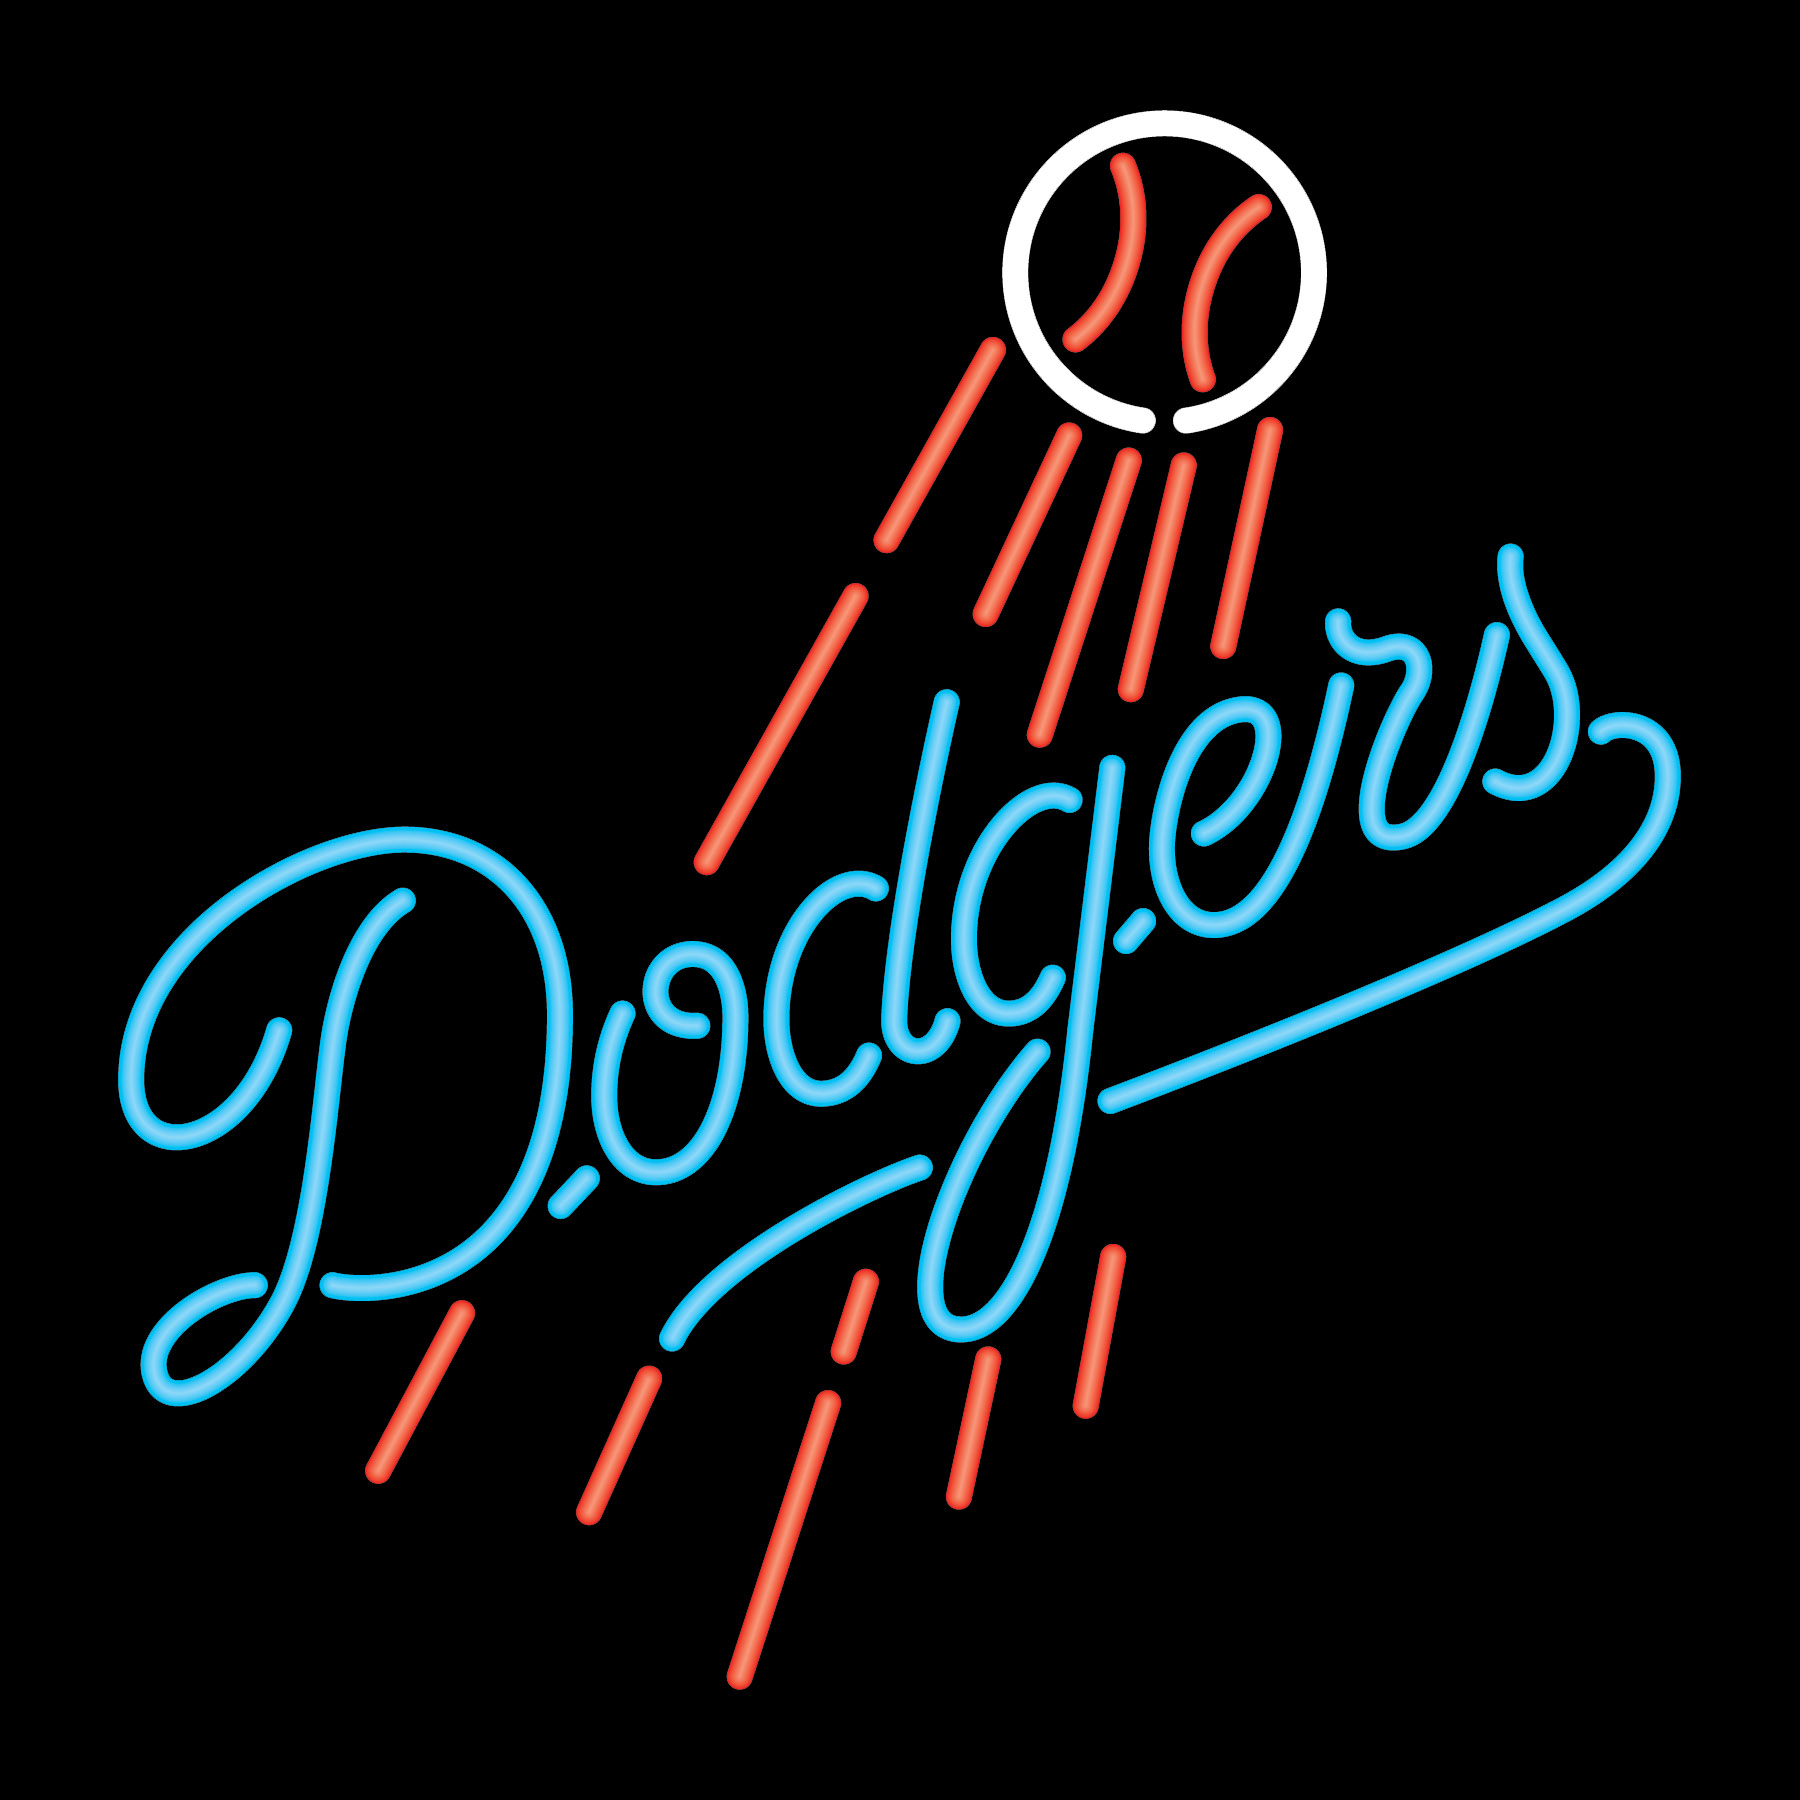 Angeles Dodgers Wallpaper Los